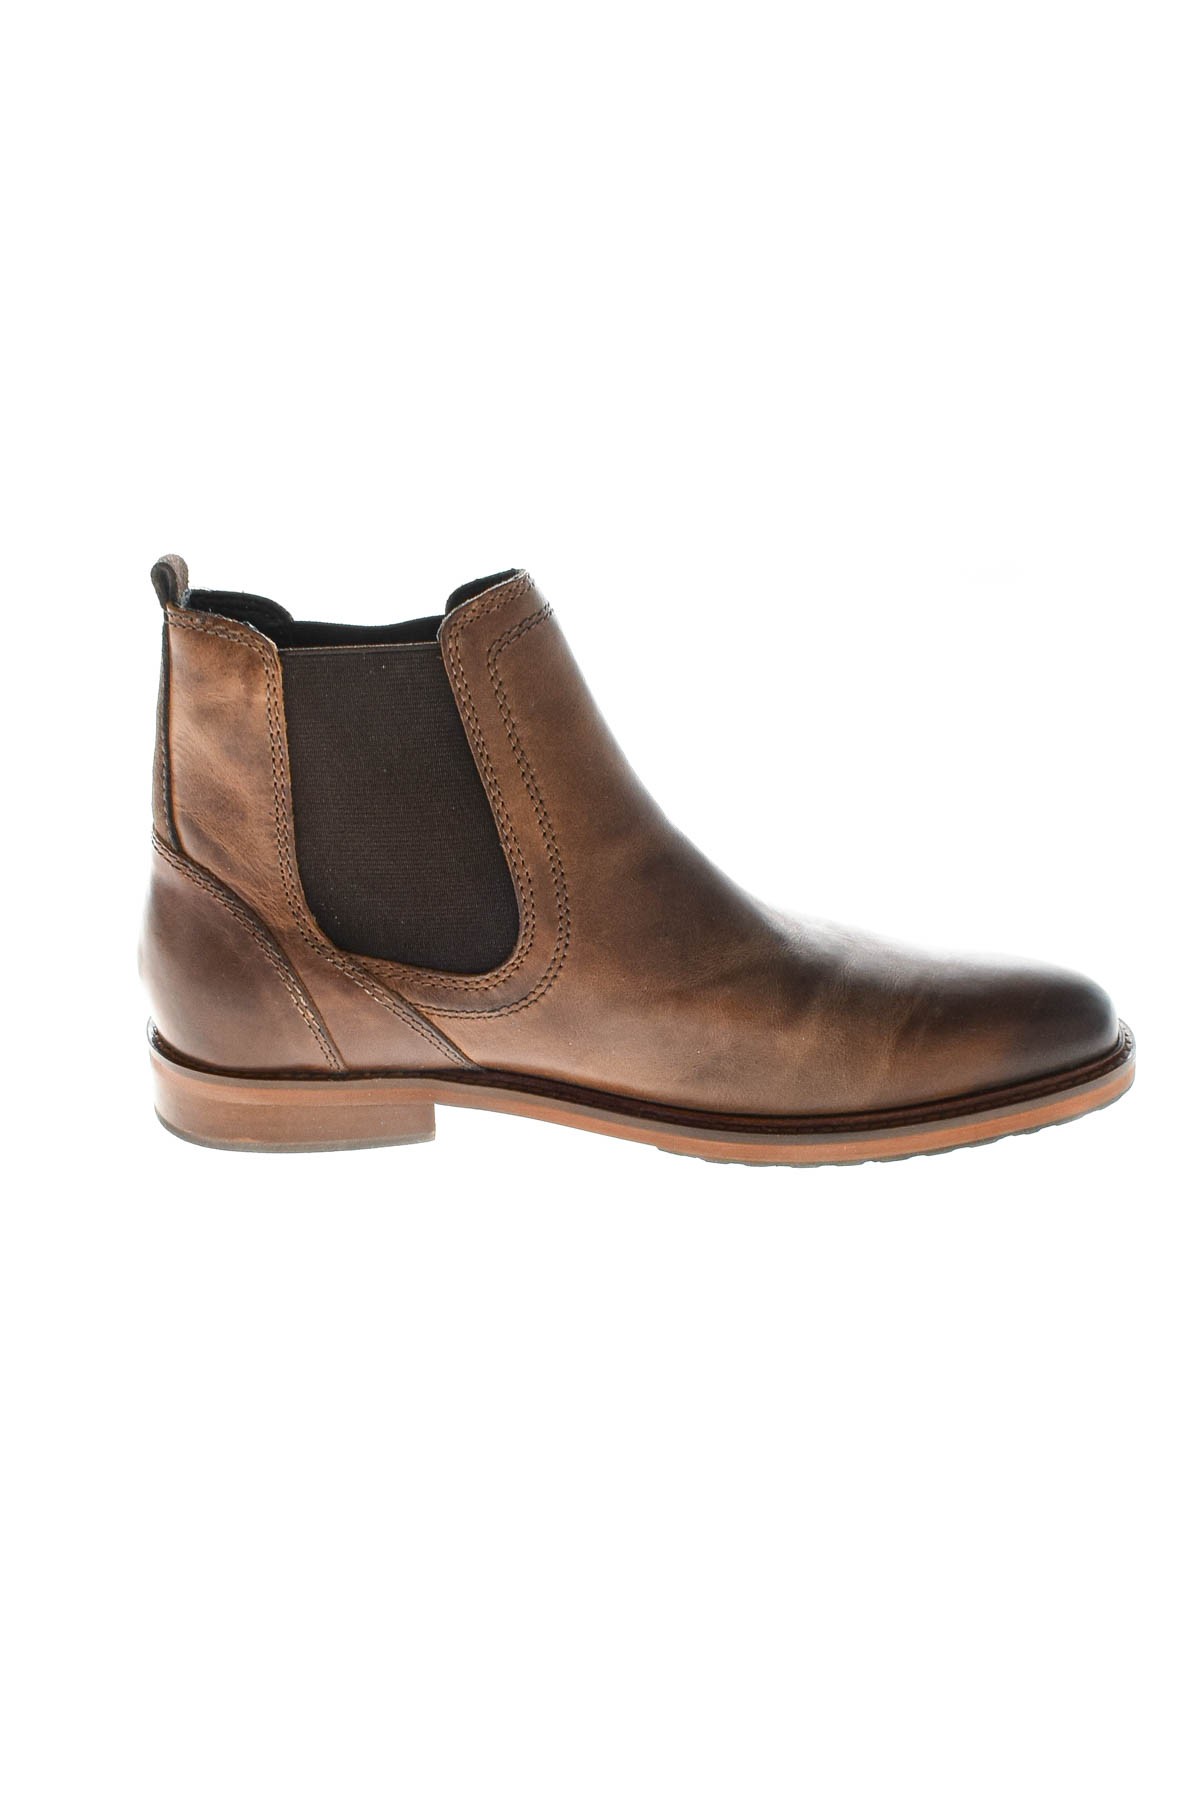 Men's boots - ALDO - 2